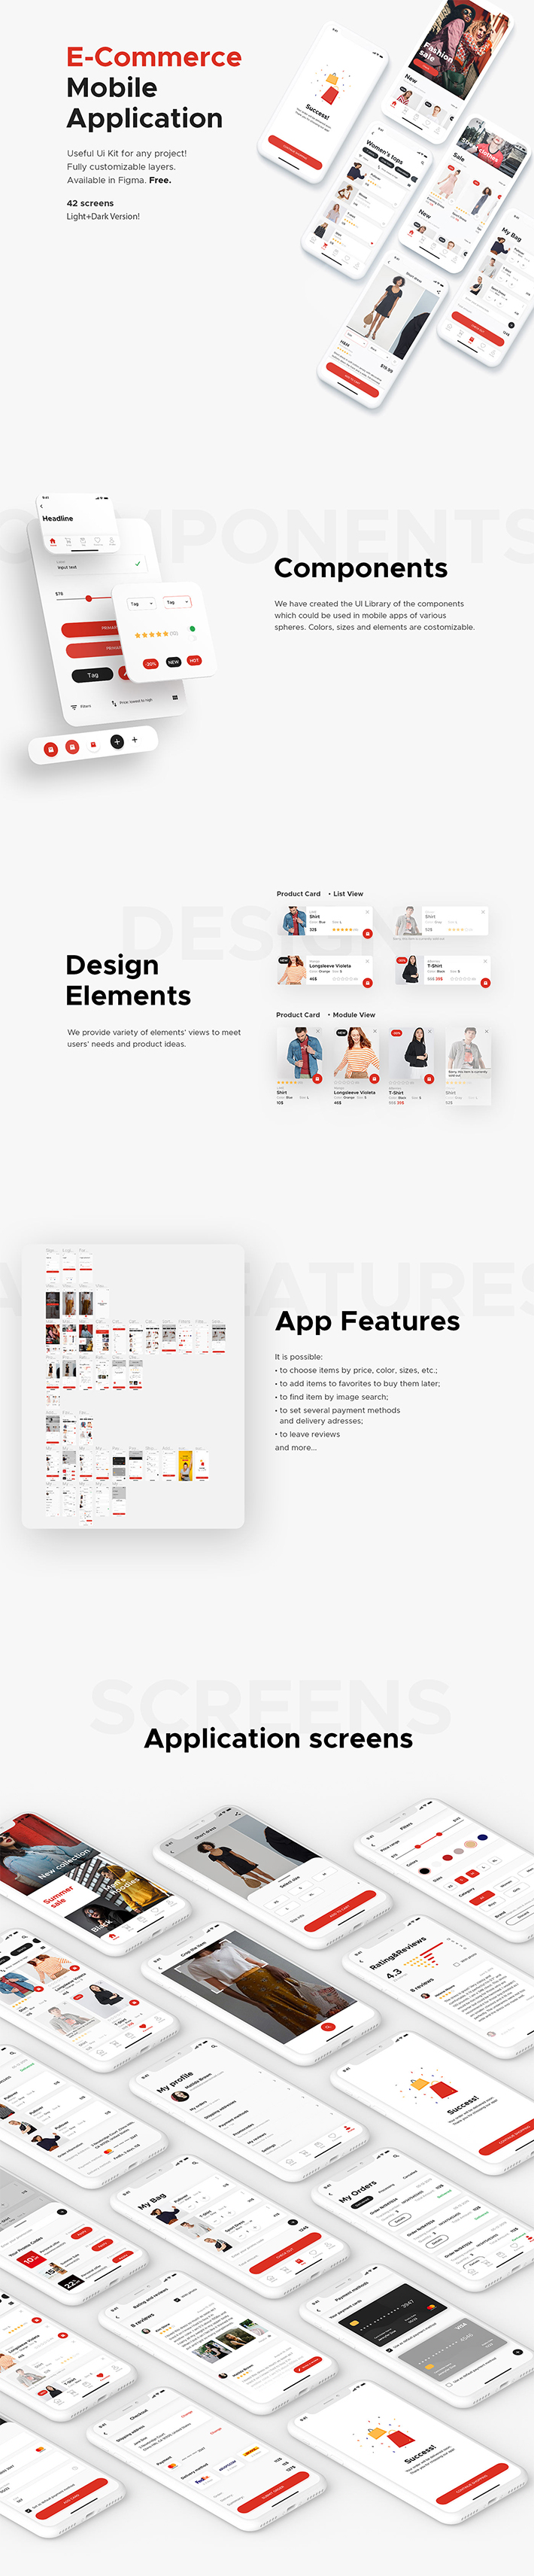 Freebie : Creative E-Commerce Mobile Application (Online Shop)